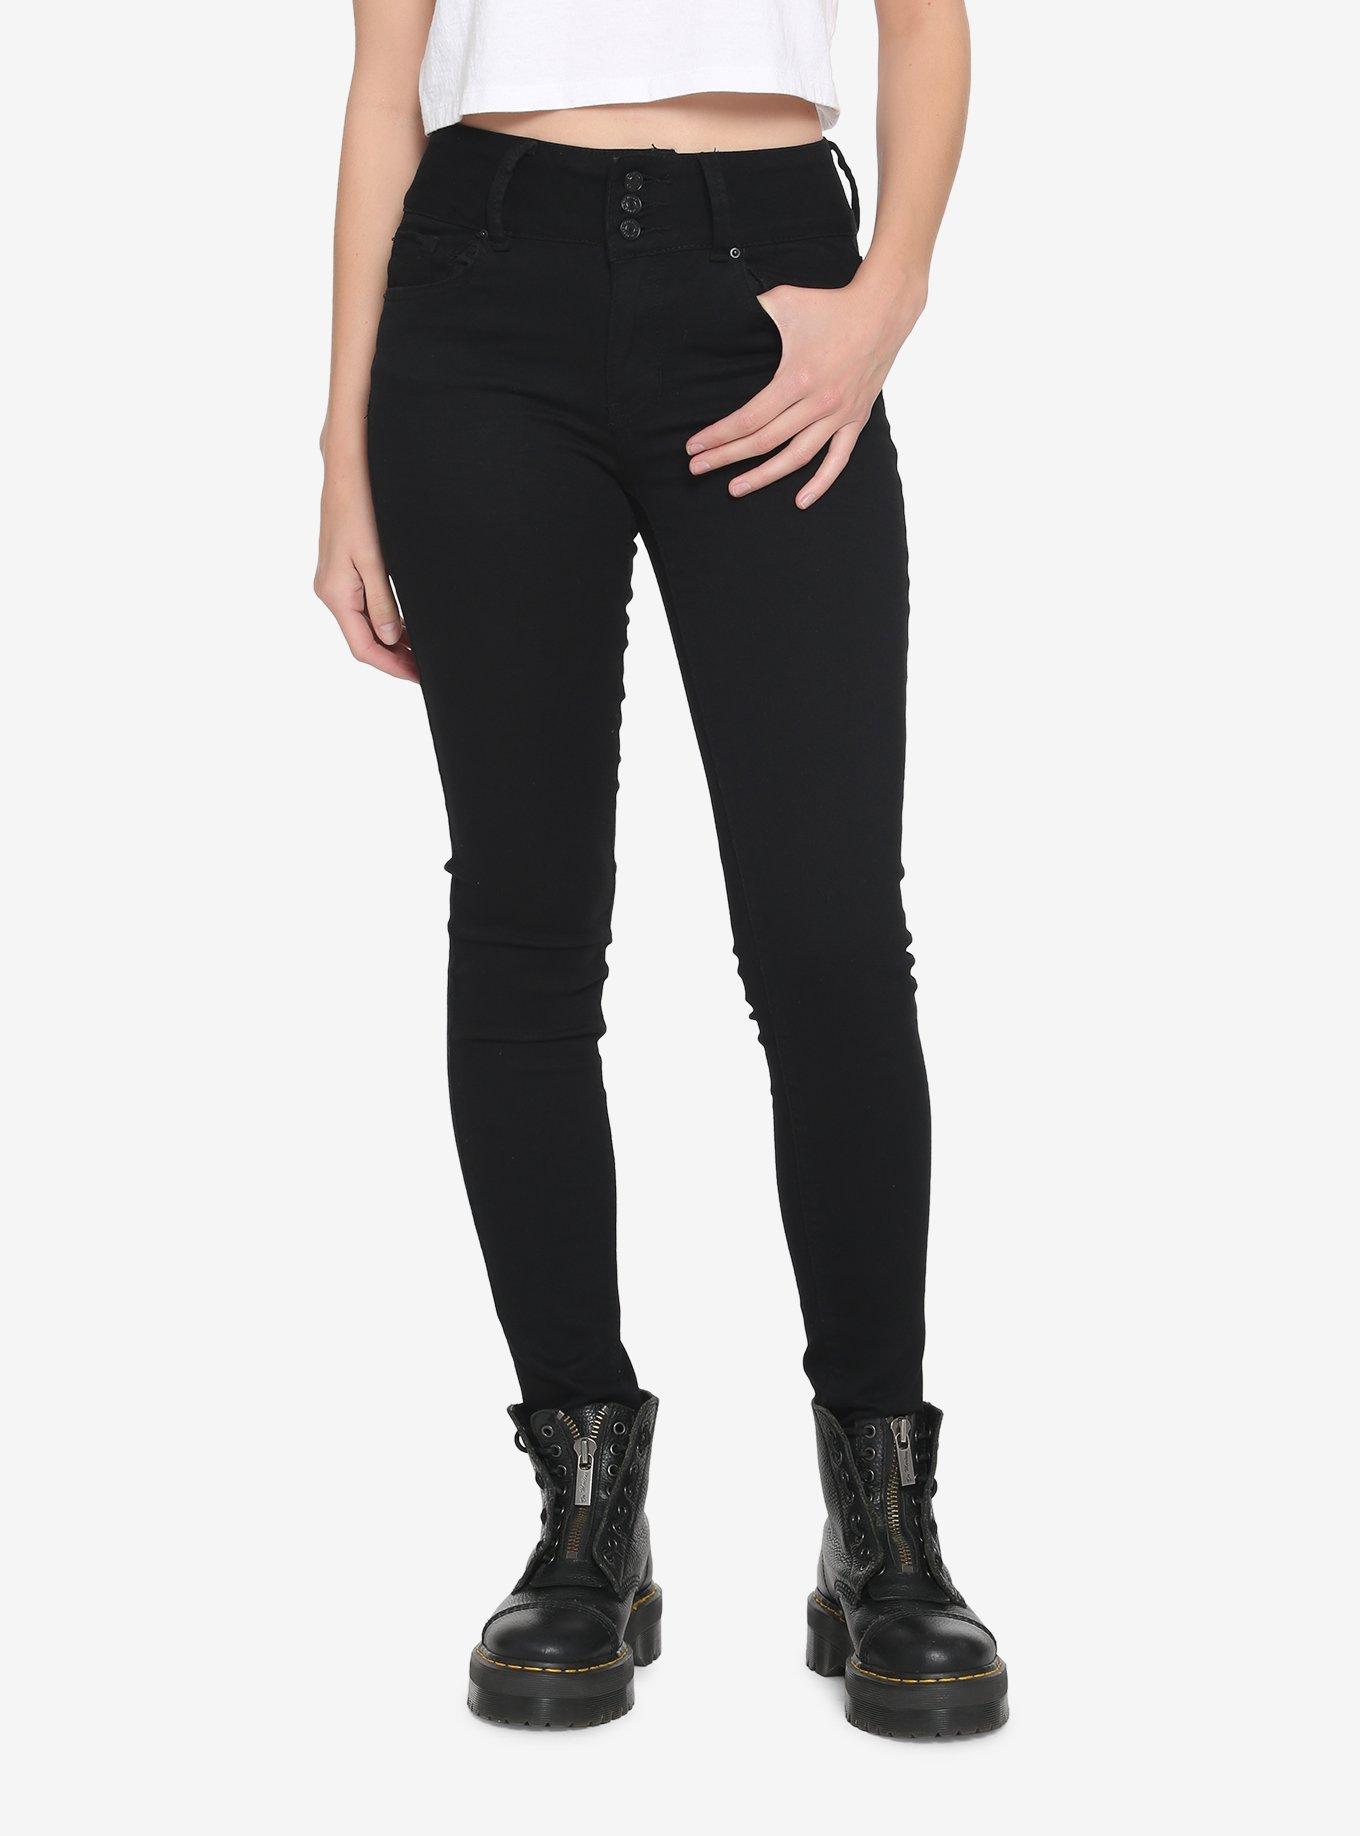 Black 3-Button Skinny Jeans, BLACK, hi-res